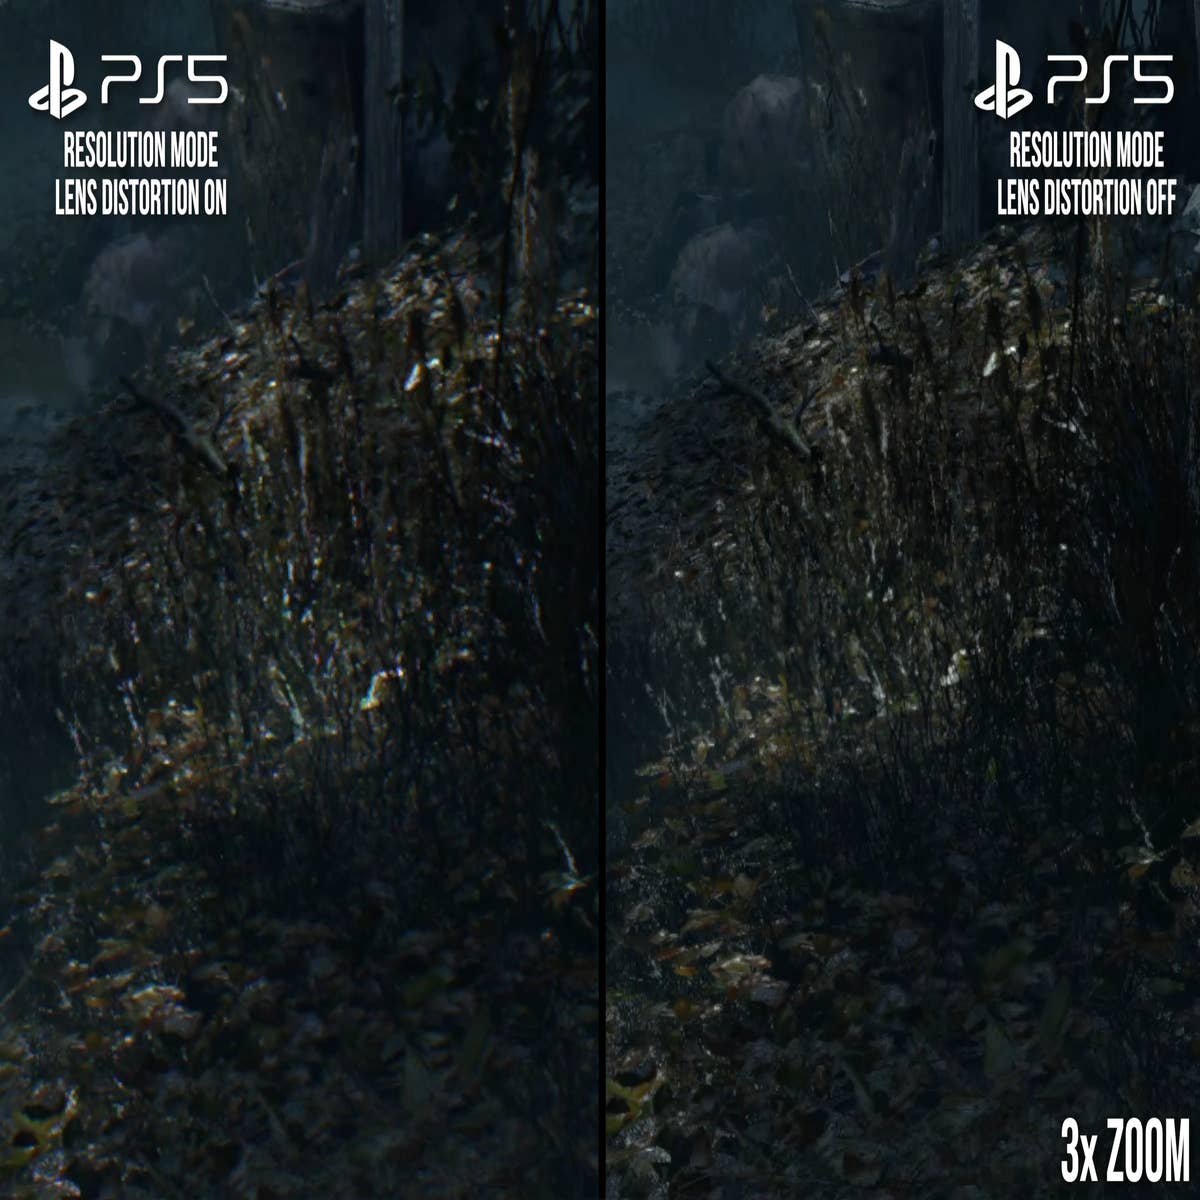 Resident Evil 4 Remake Comparison PS4 vs PS5 